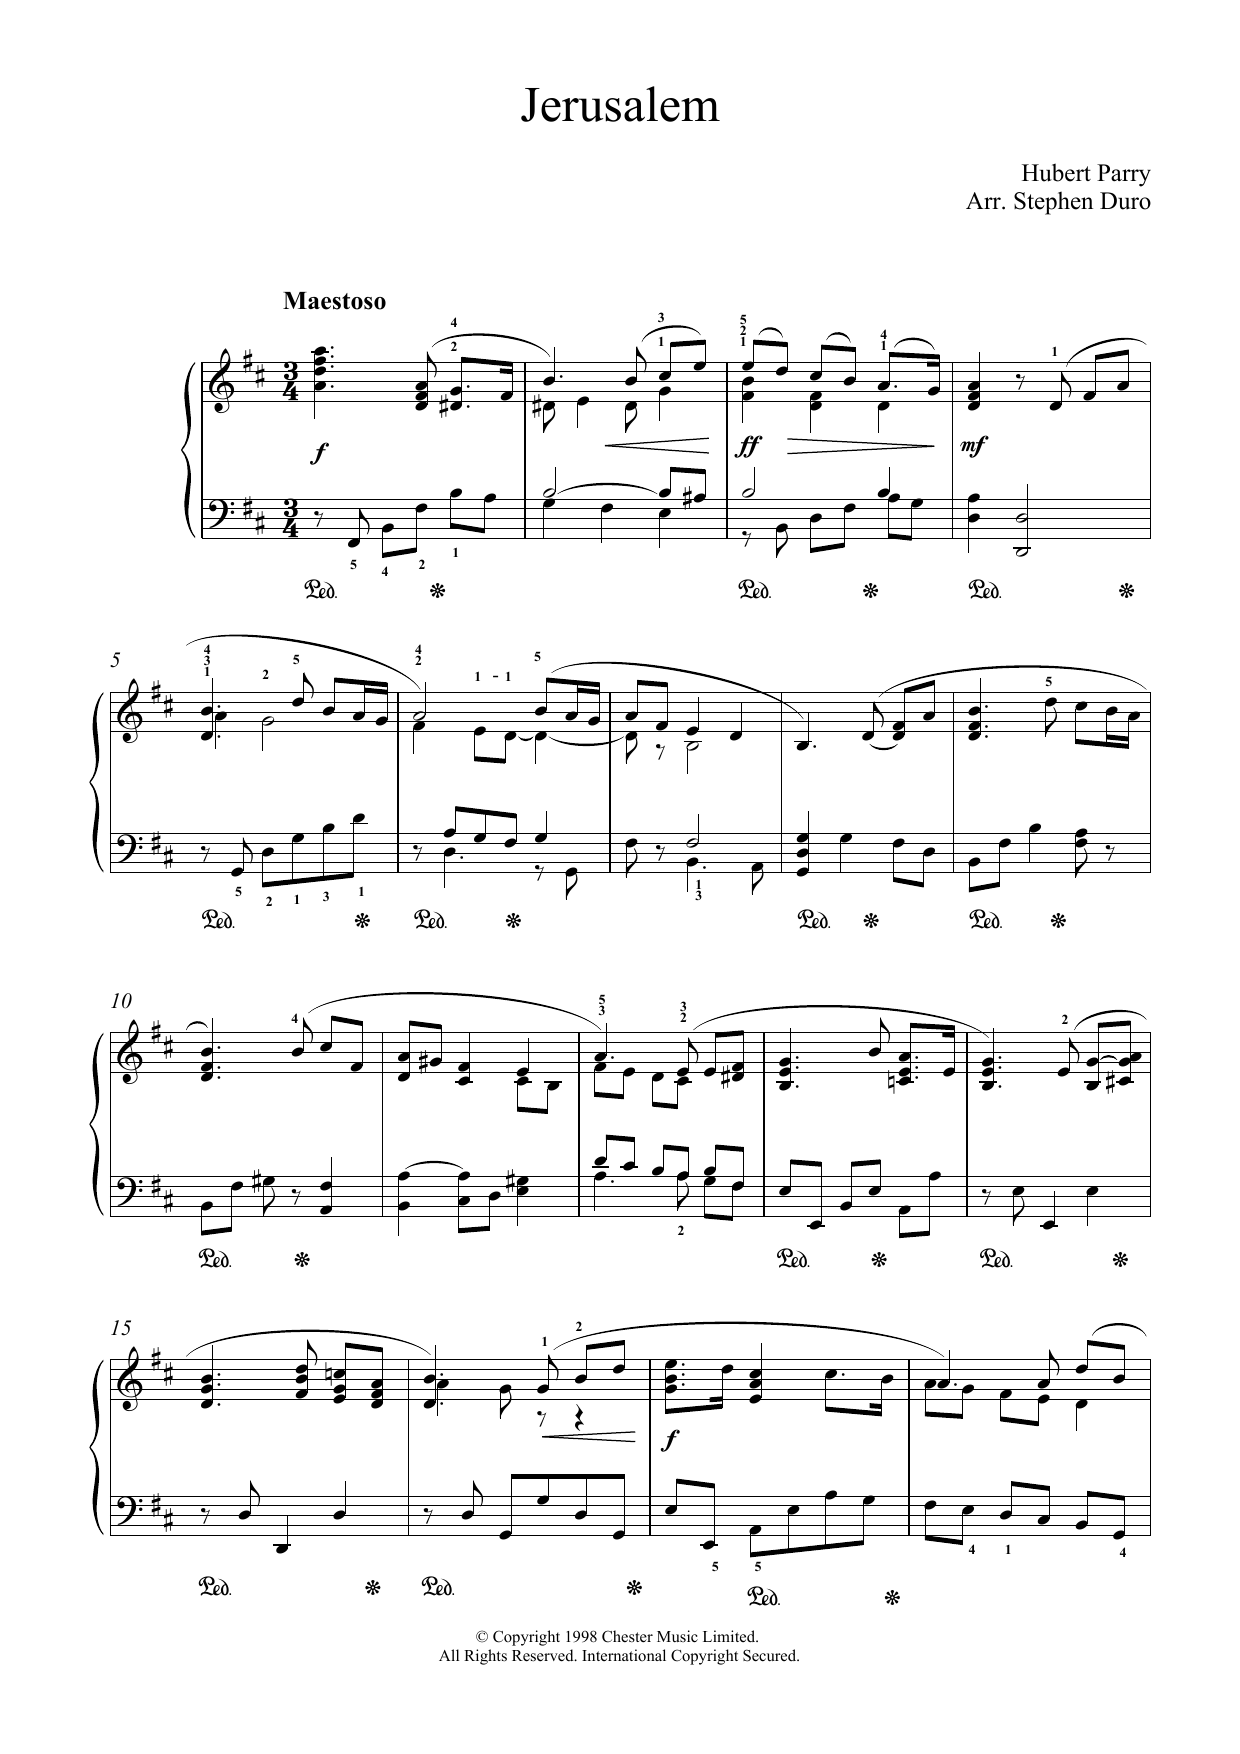 Hubert Parry Jerusalem sheet music notes and chords. Download Printable PDF.